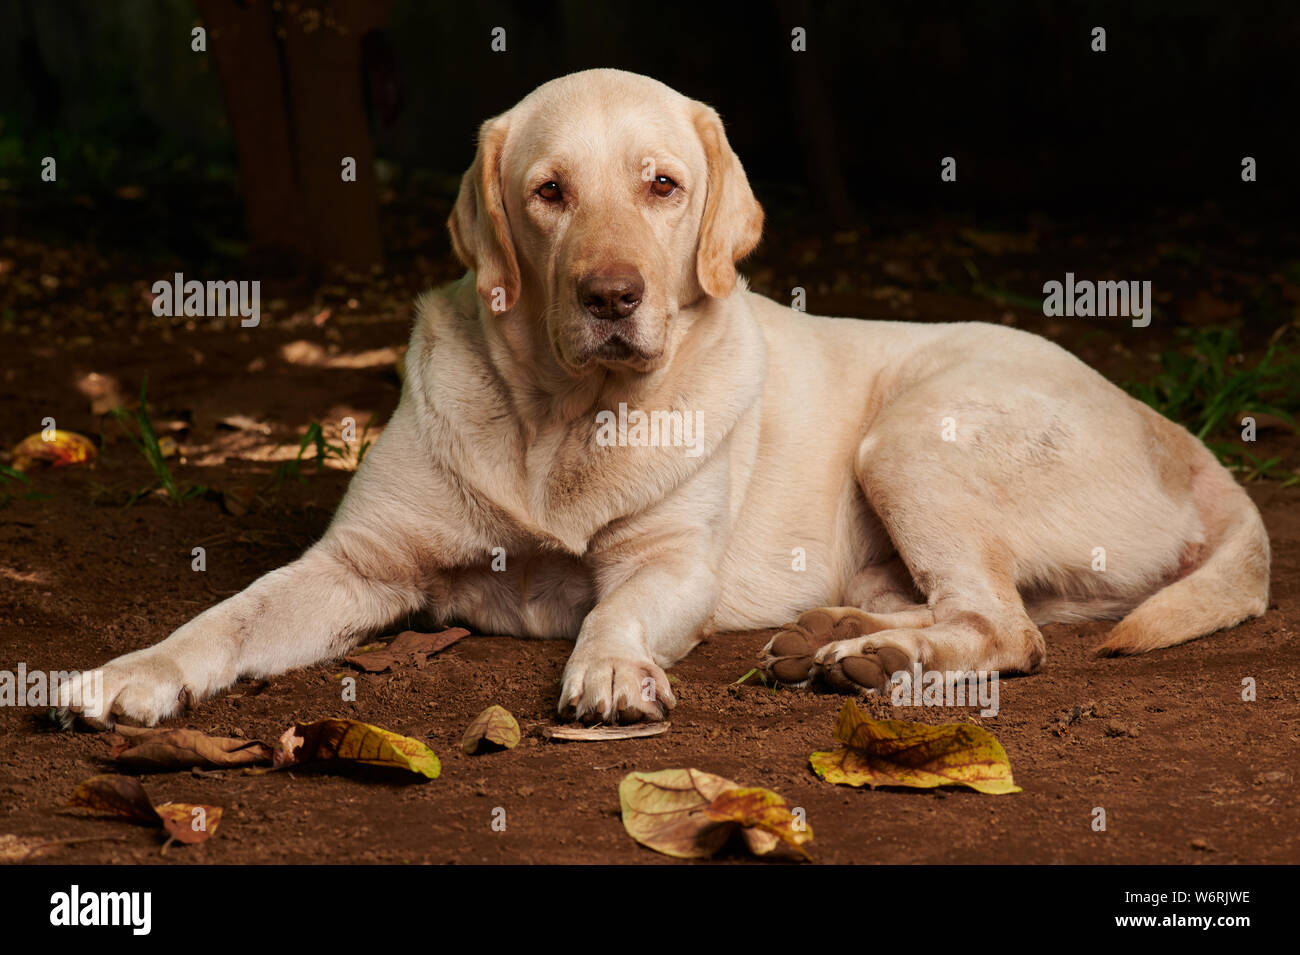 Big labrador dog lay outside on ground garden Stock Photo - Alamy